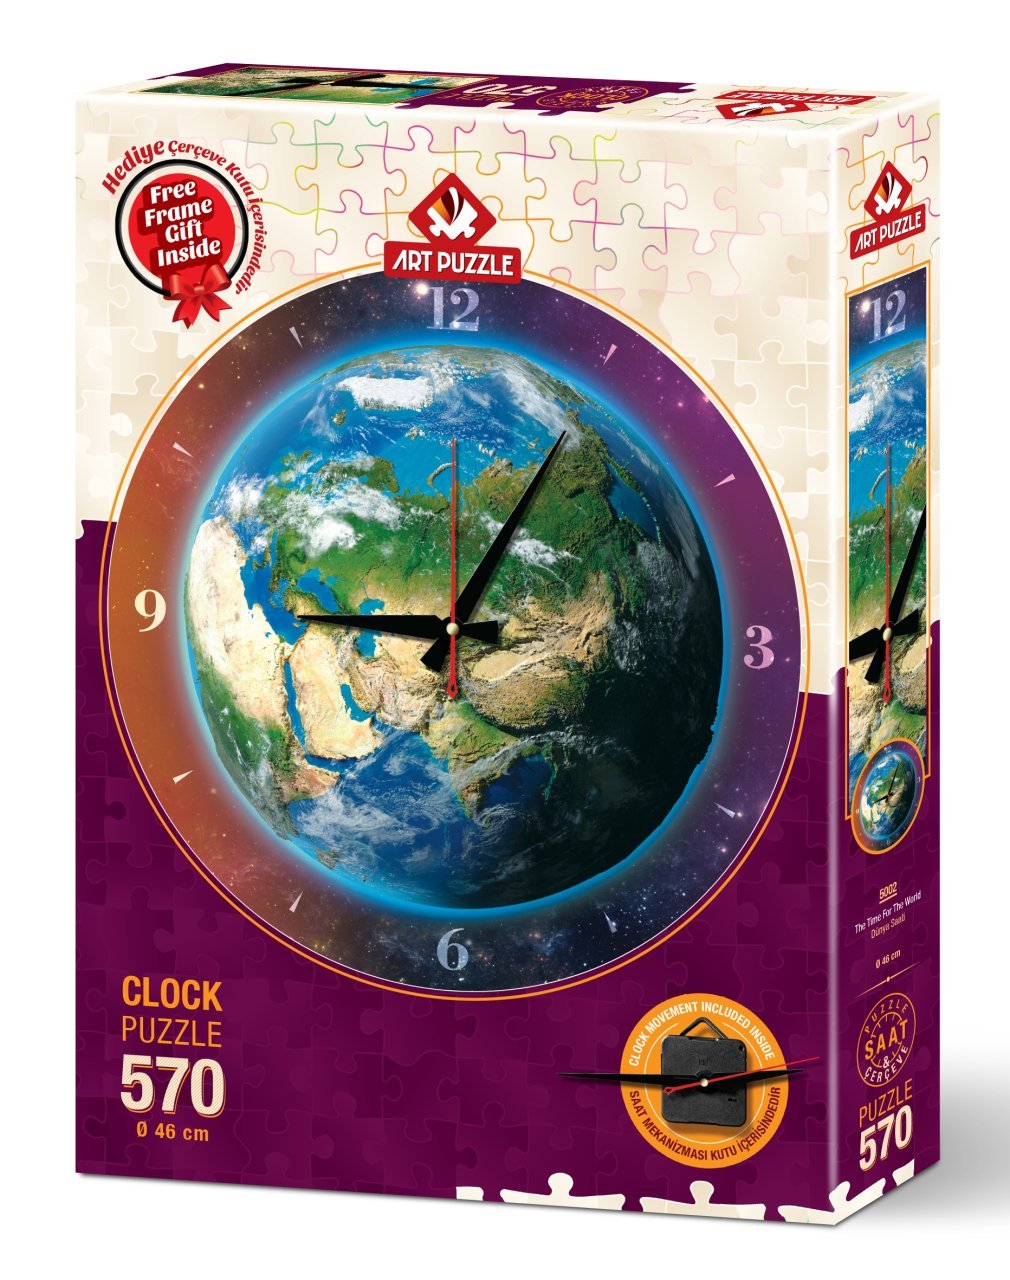 Art Puzzle World Clock 570 Pieces Clock Puzzle